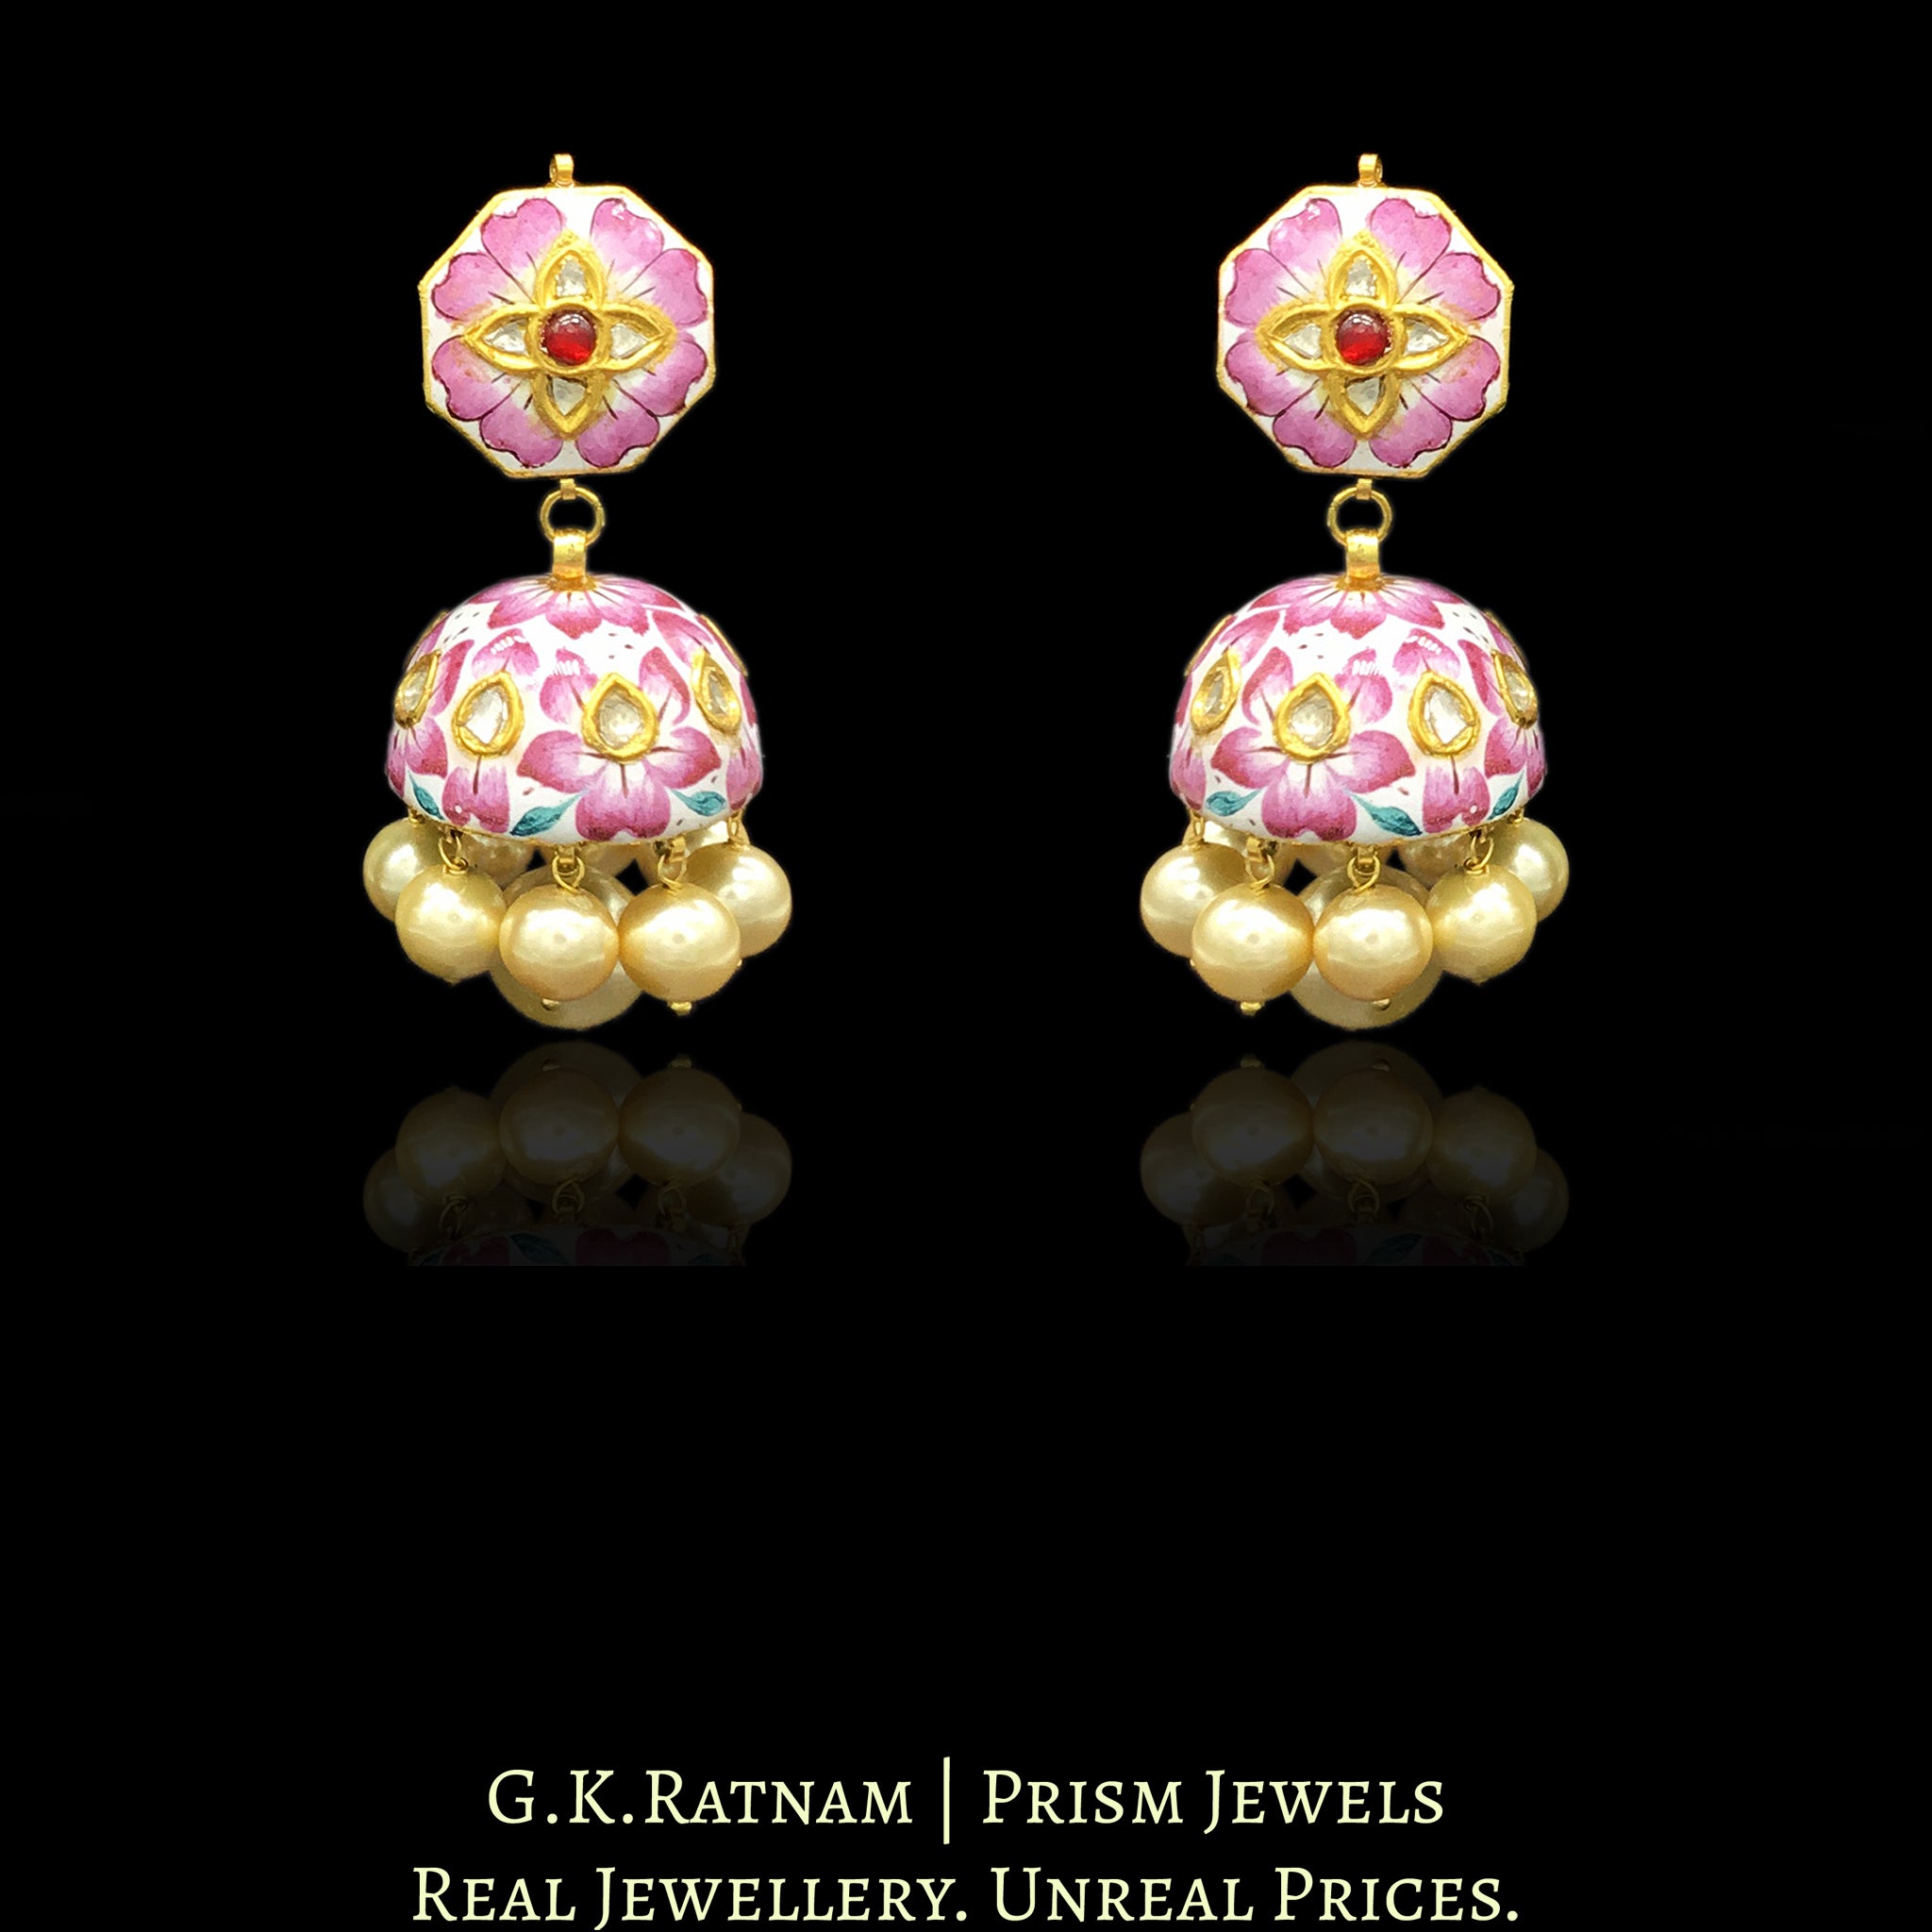 23k Gold and Diamond Polki Jhumki Earring Pair with intricate pink enamelling - G. K. Ratnam